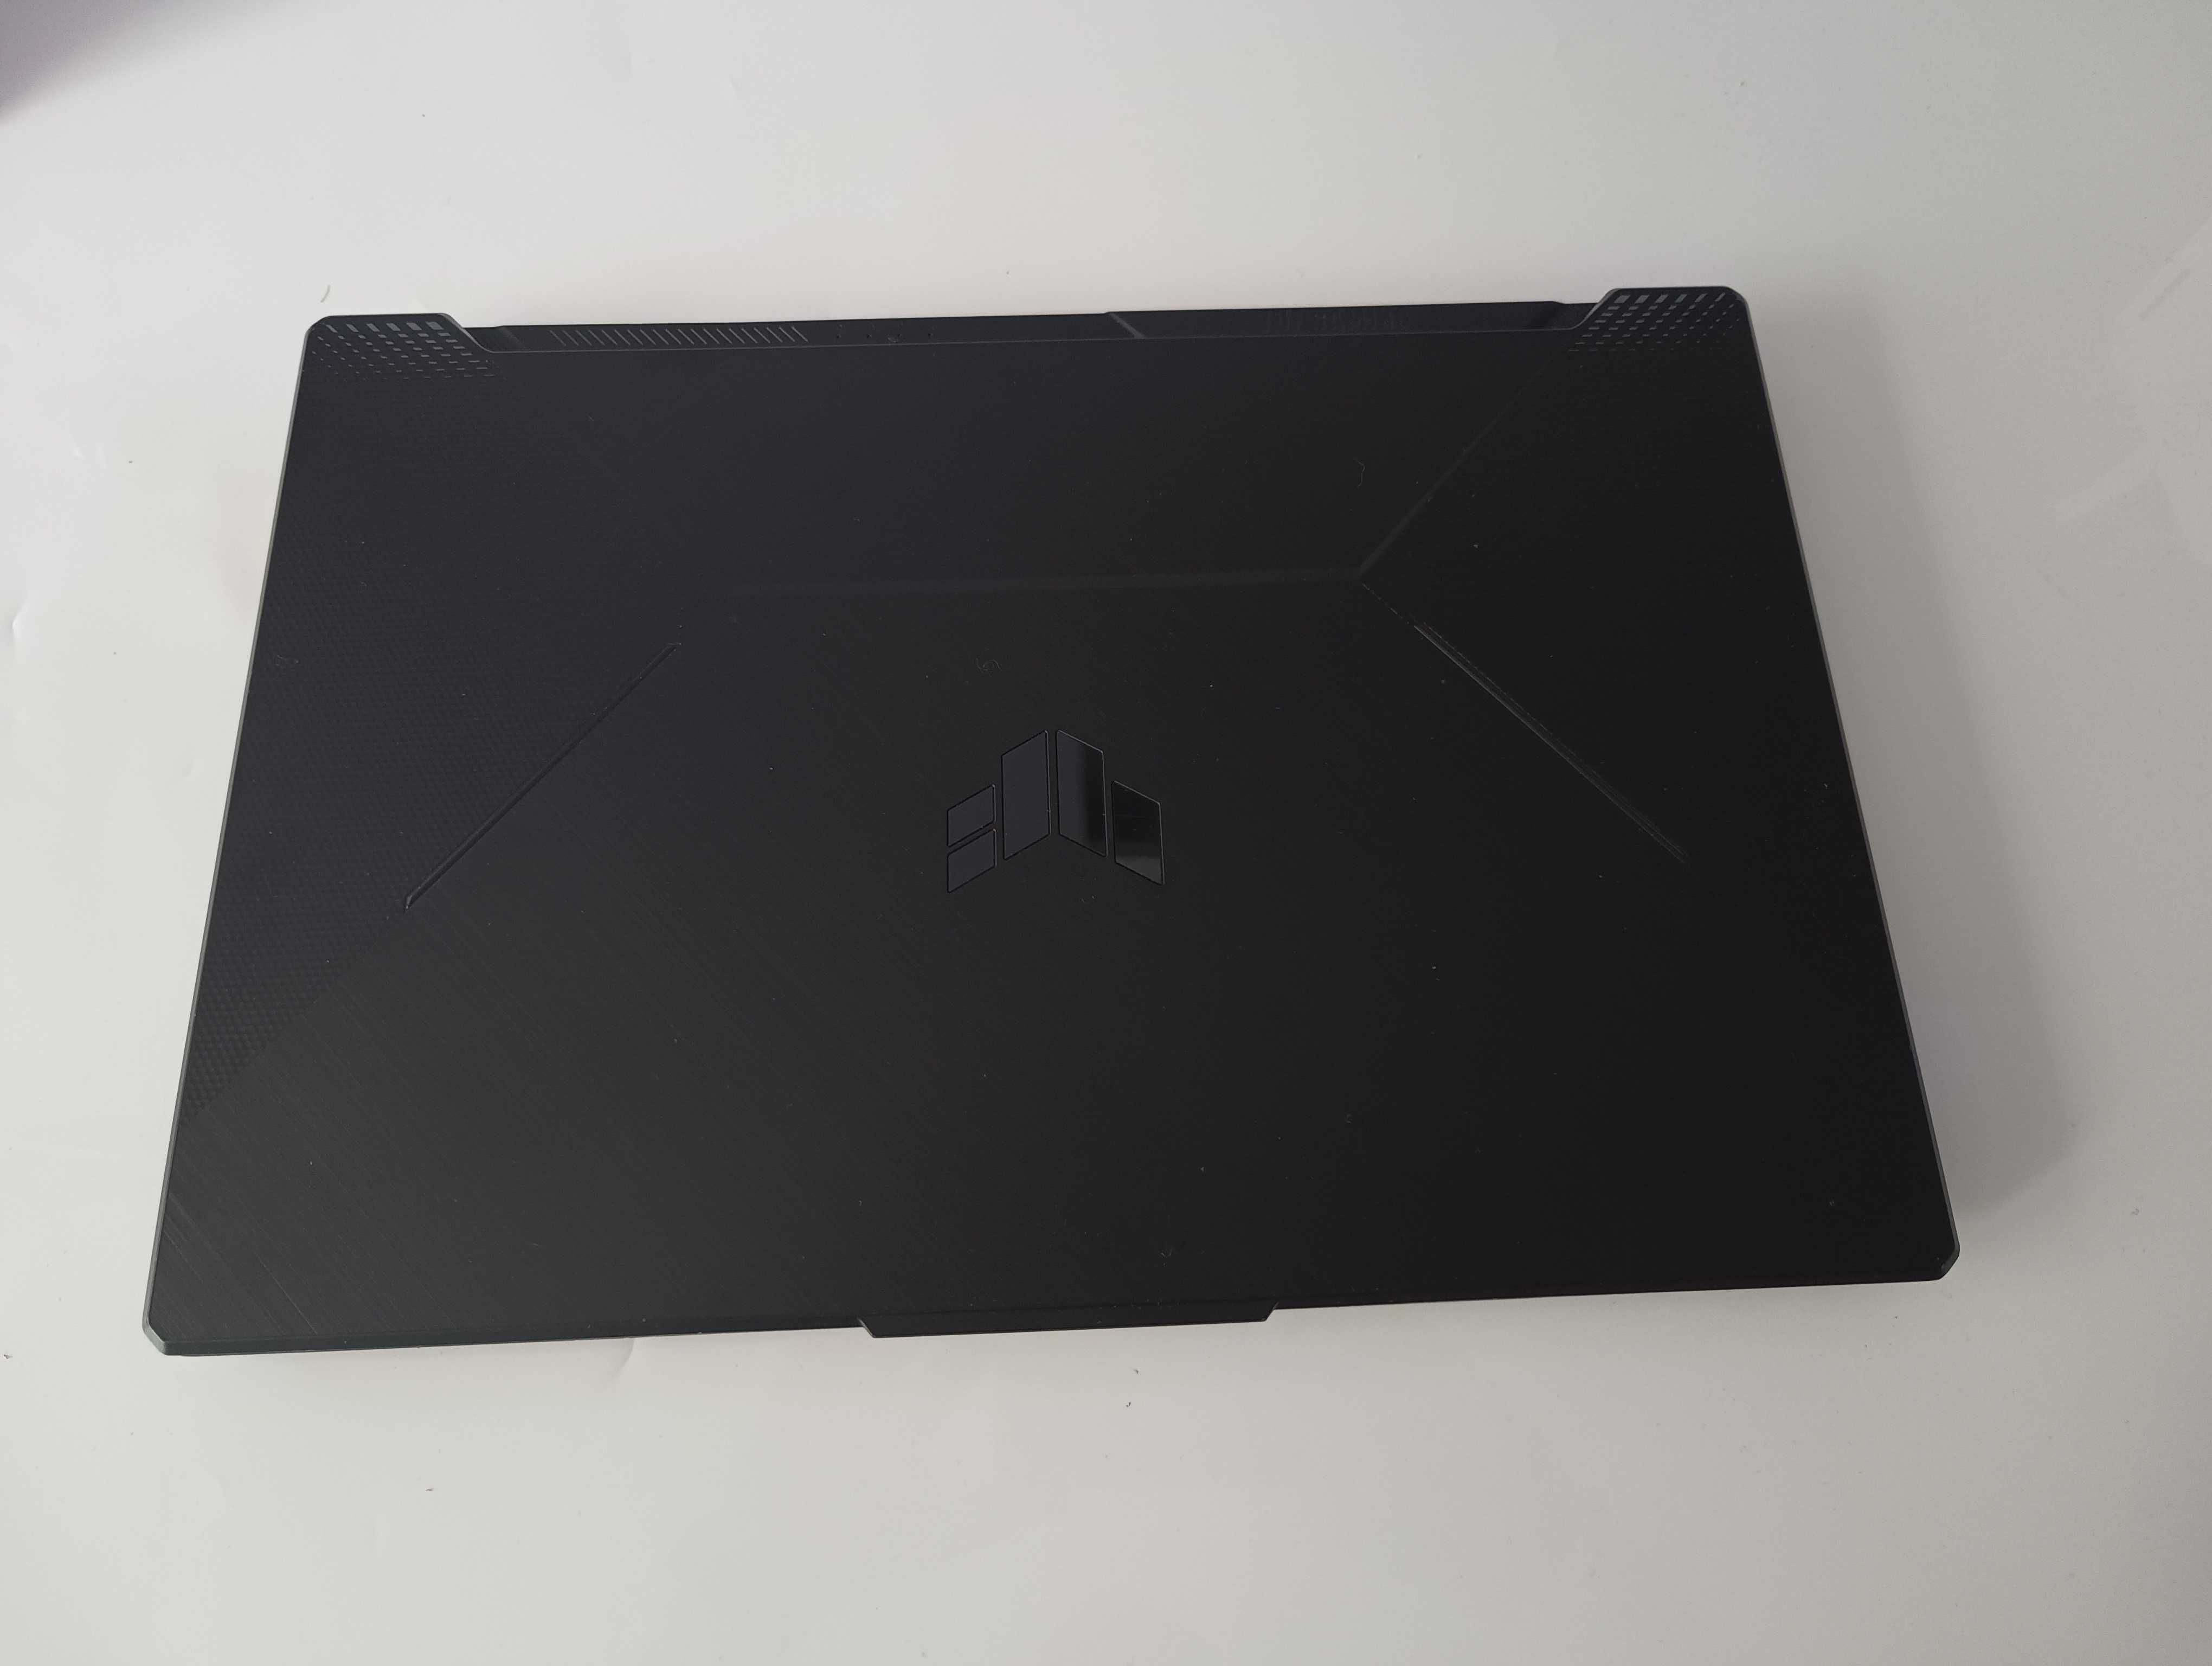 Laptop ASUS TUF Gaming F17, 32GB RAM w idealnym stanie. PETARDA!!!